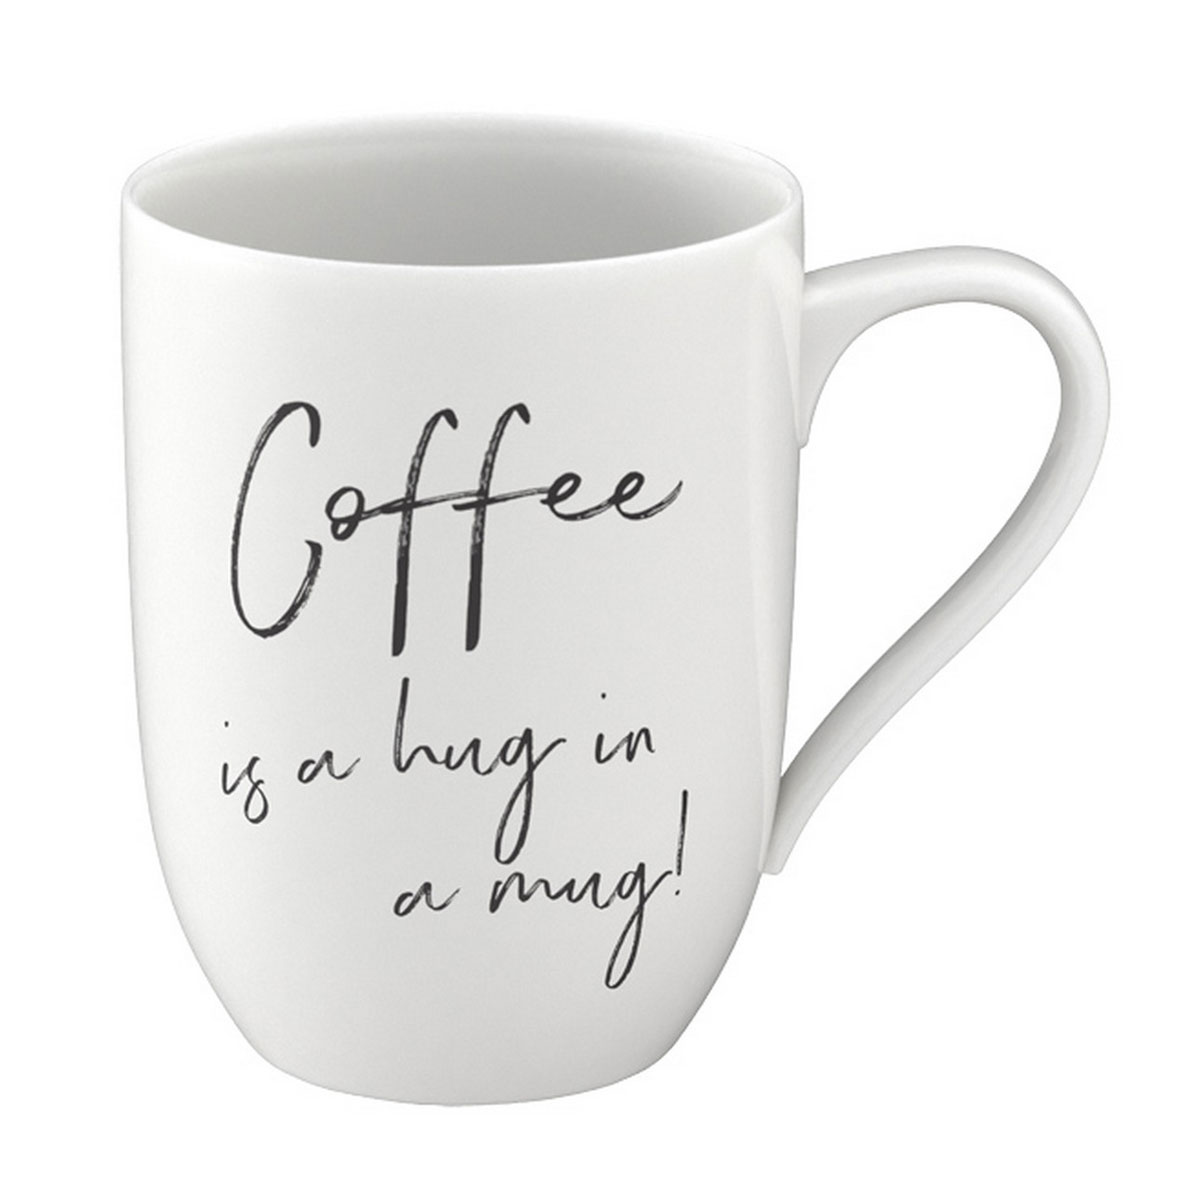 Villeroy and Boch Statement Mug Coffee is hug in mug